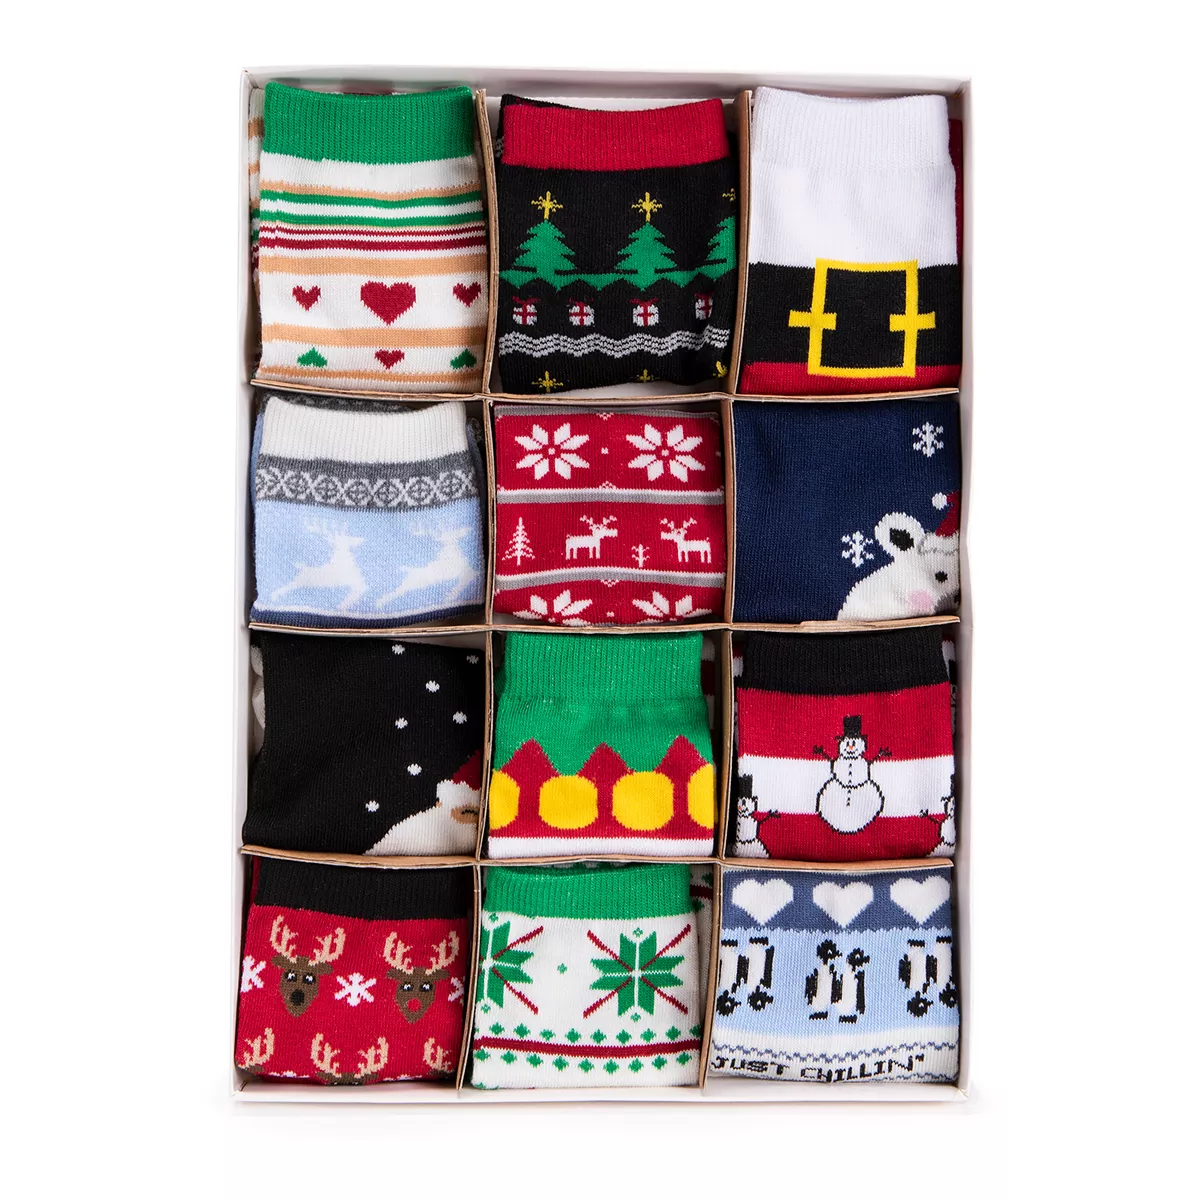 2020 MUK LUKS Socks Advent Calendars Available Now! hello subscription